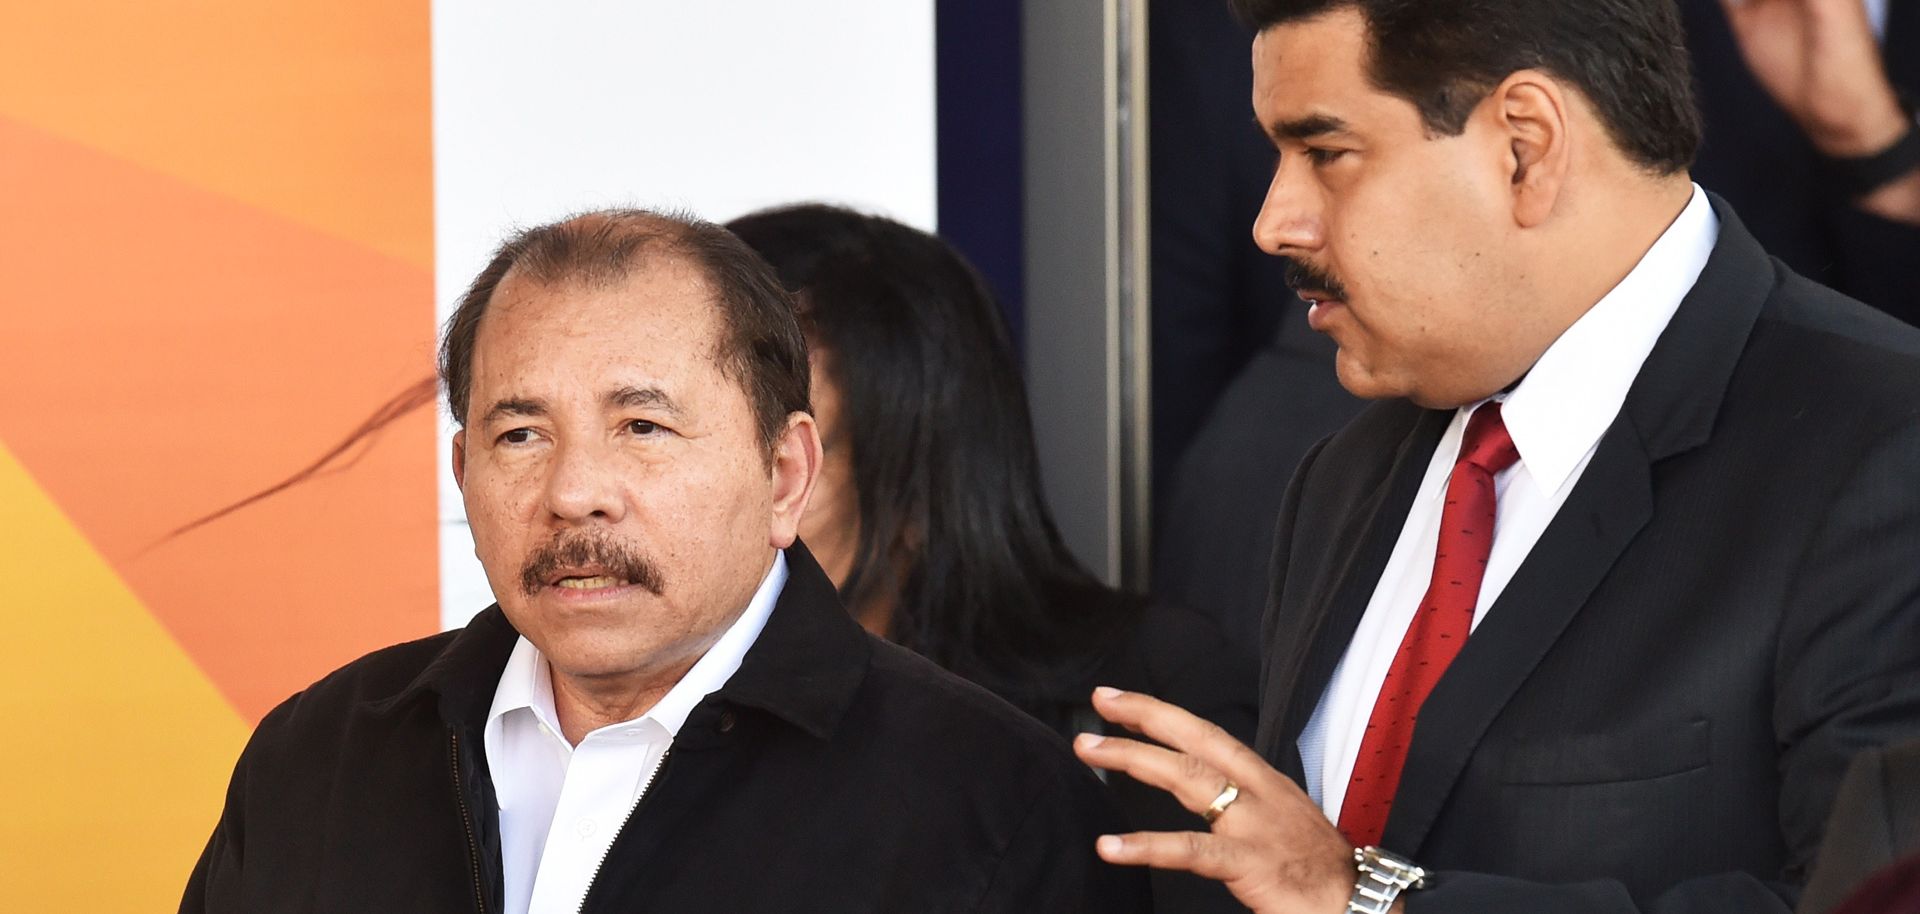 A Sign of Faltering Trust Between Nicaragua and Venezuela